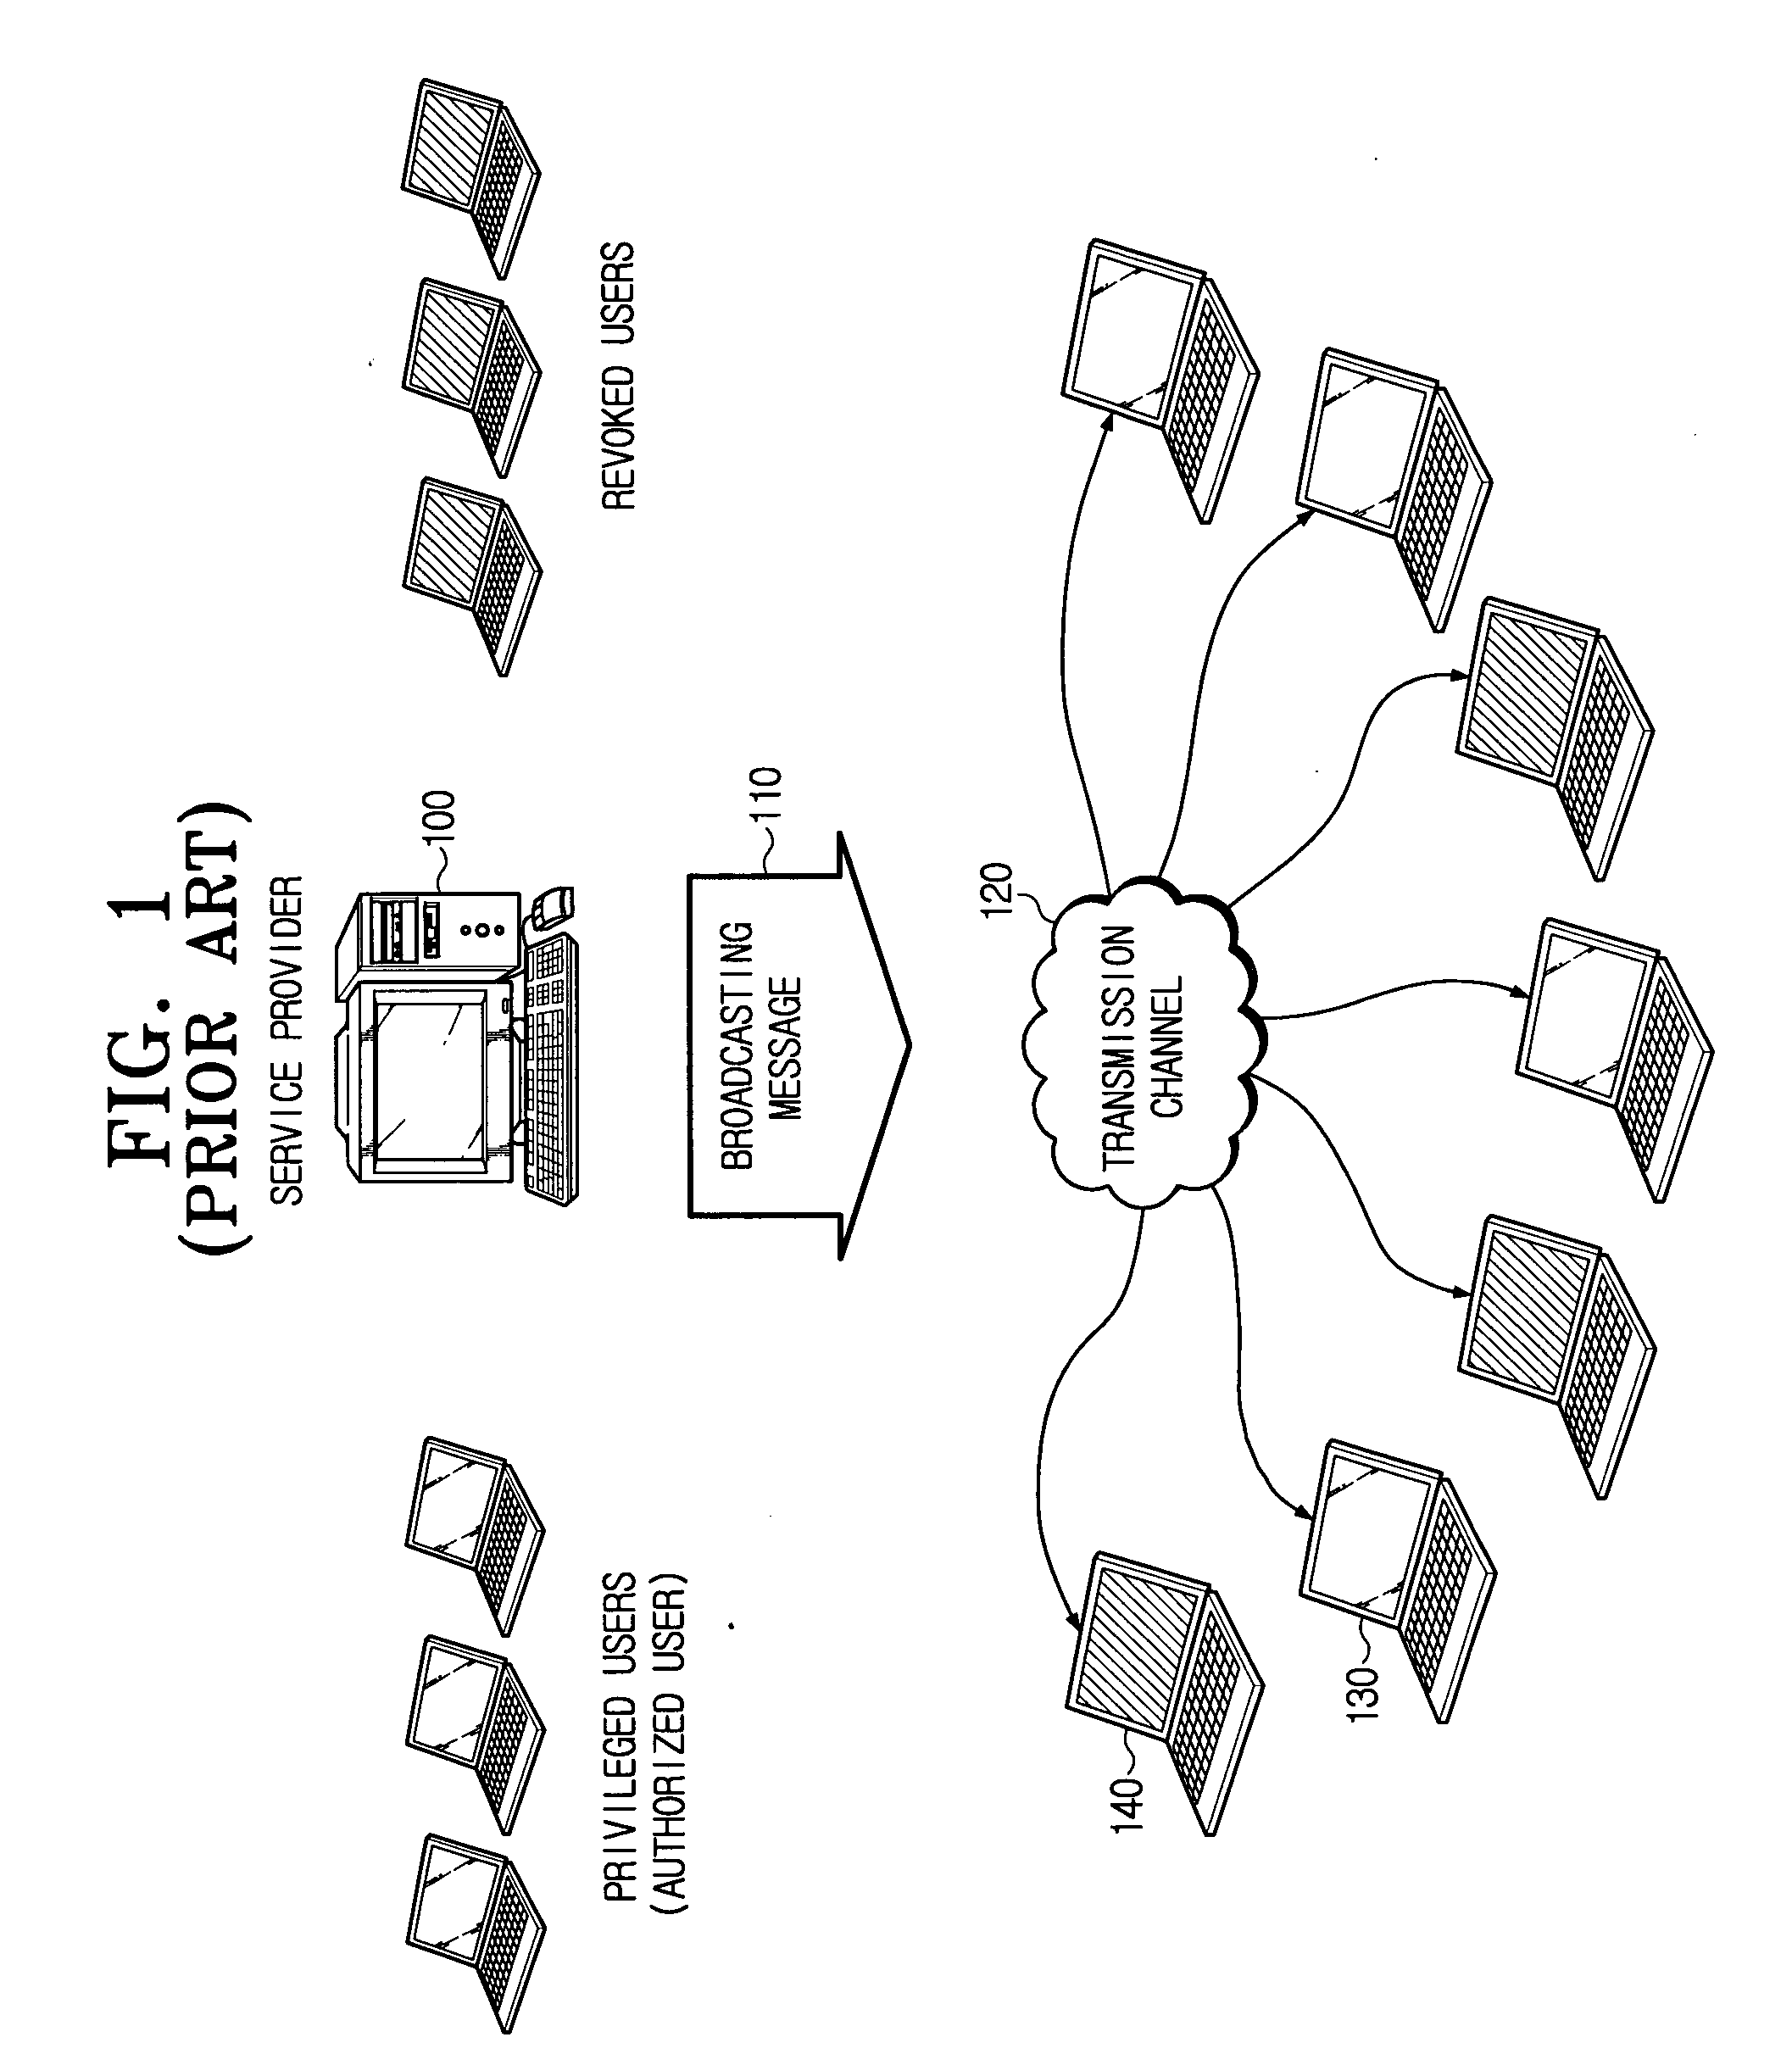 Hierarchical threshold tree-based broadcast encryption method